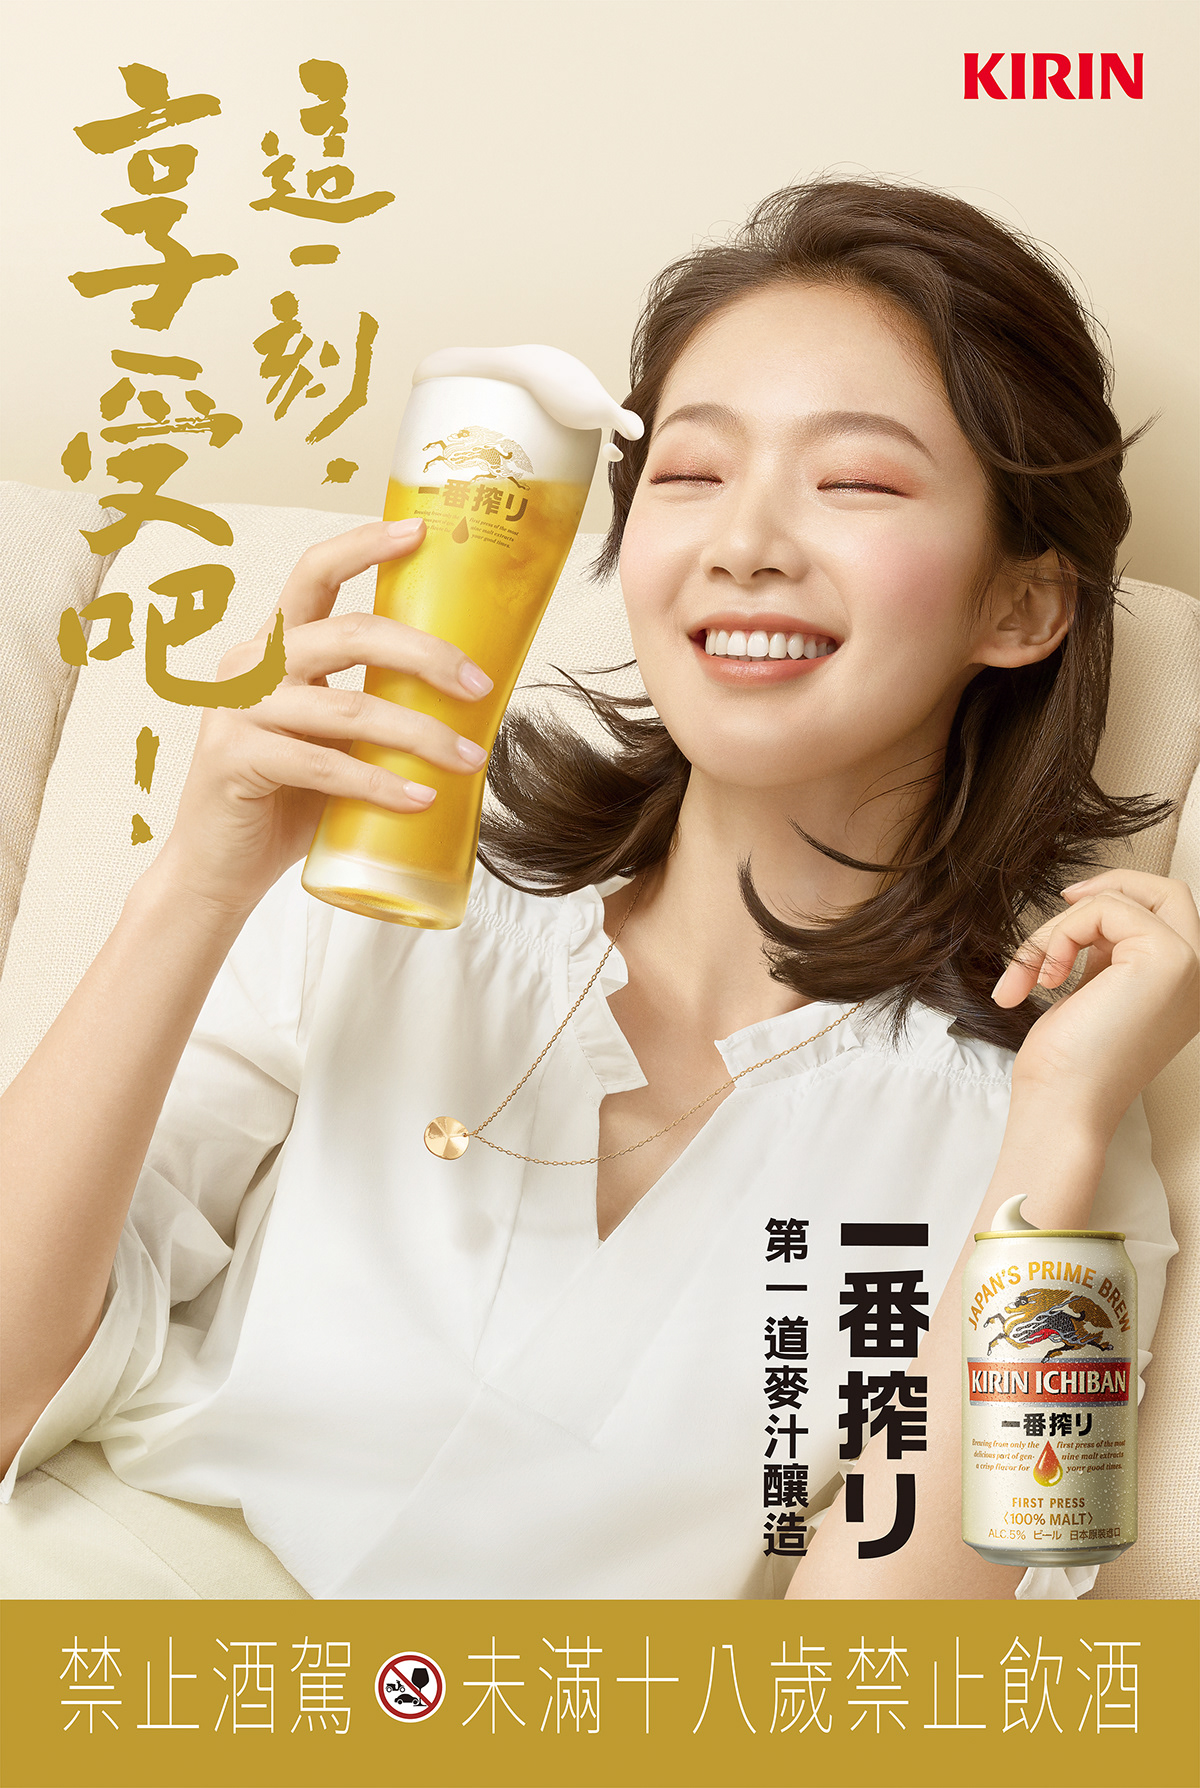 Kirin beer enjoy drink moment japan 一番搾 麥汁 啤酒 這一刻